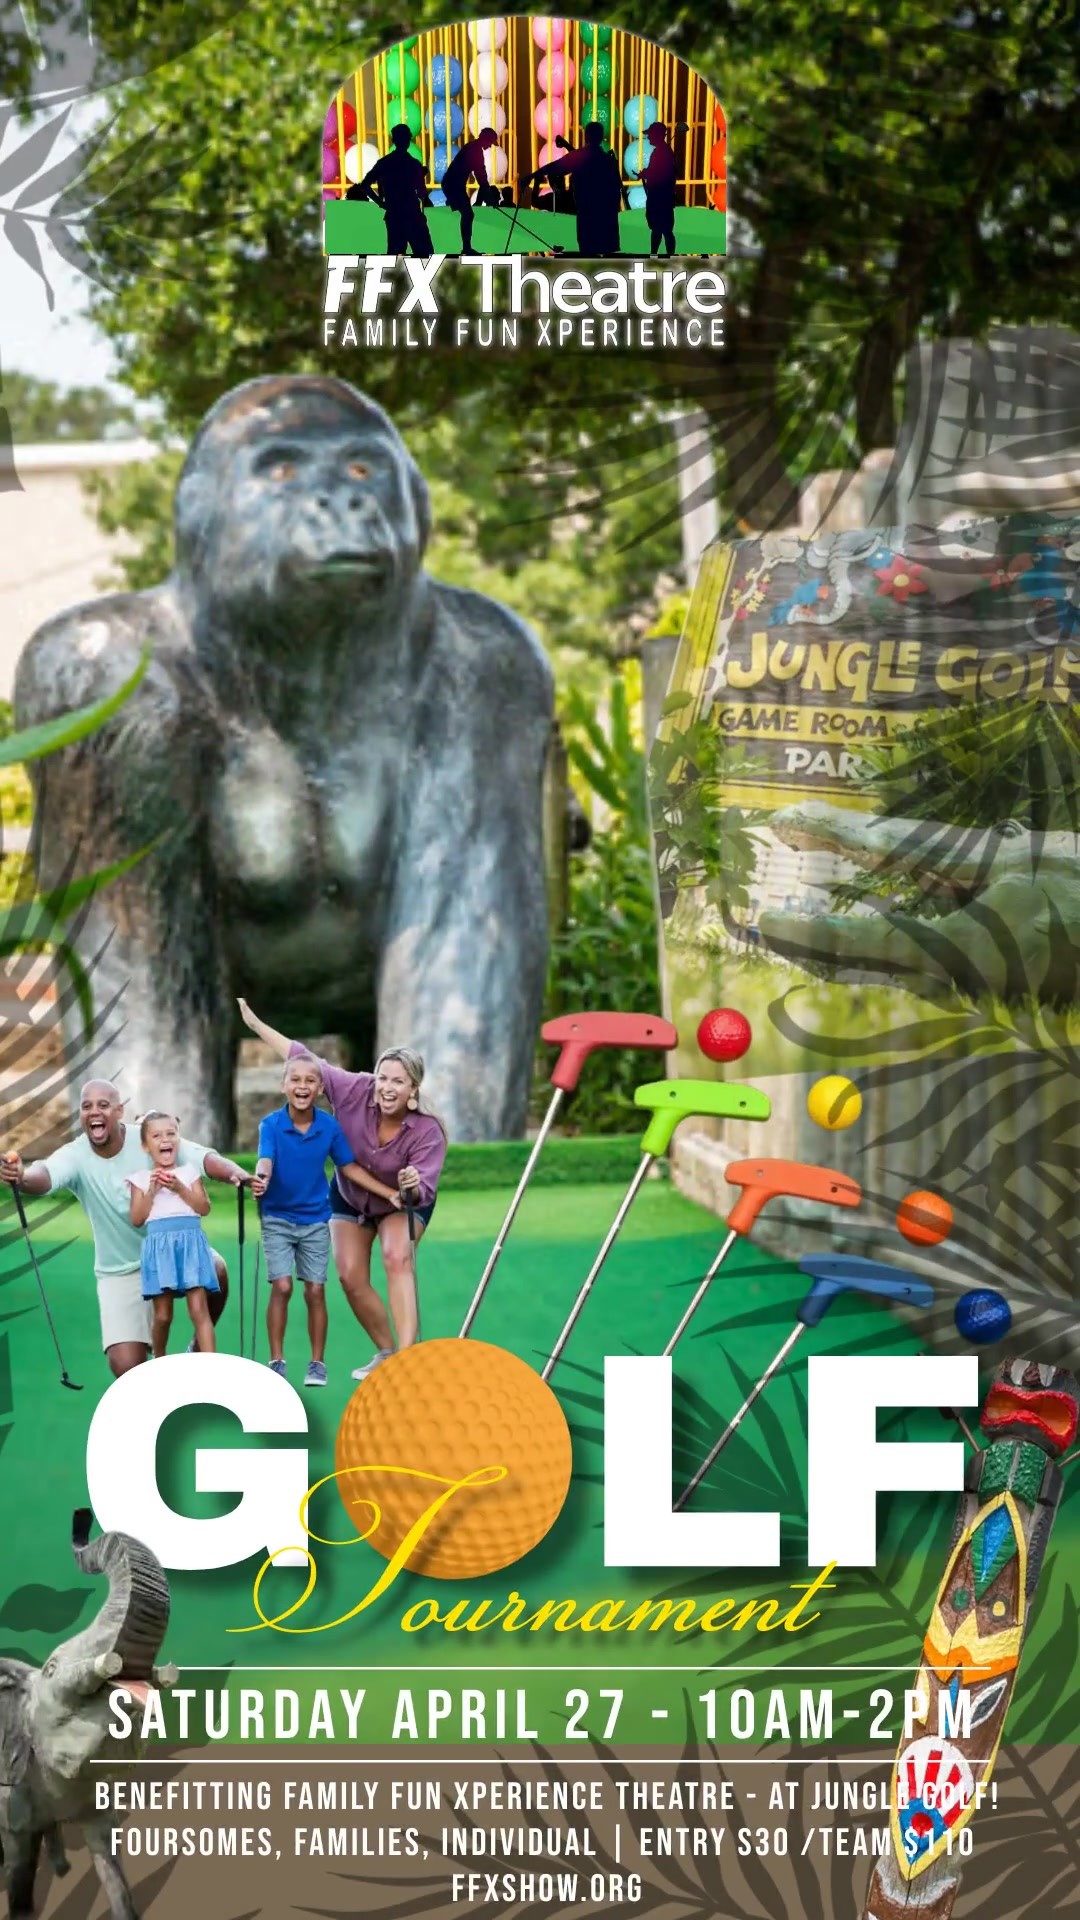 Jungle Golf Tournament! FFX Fun-raiser for all ages! on abr. 29, 00:00@Jungle Golf - Compra entradas y obtén información enFamily Fun Xperience tickets.ffxshow.org